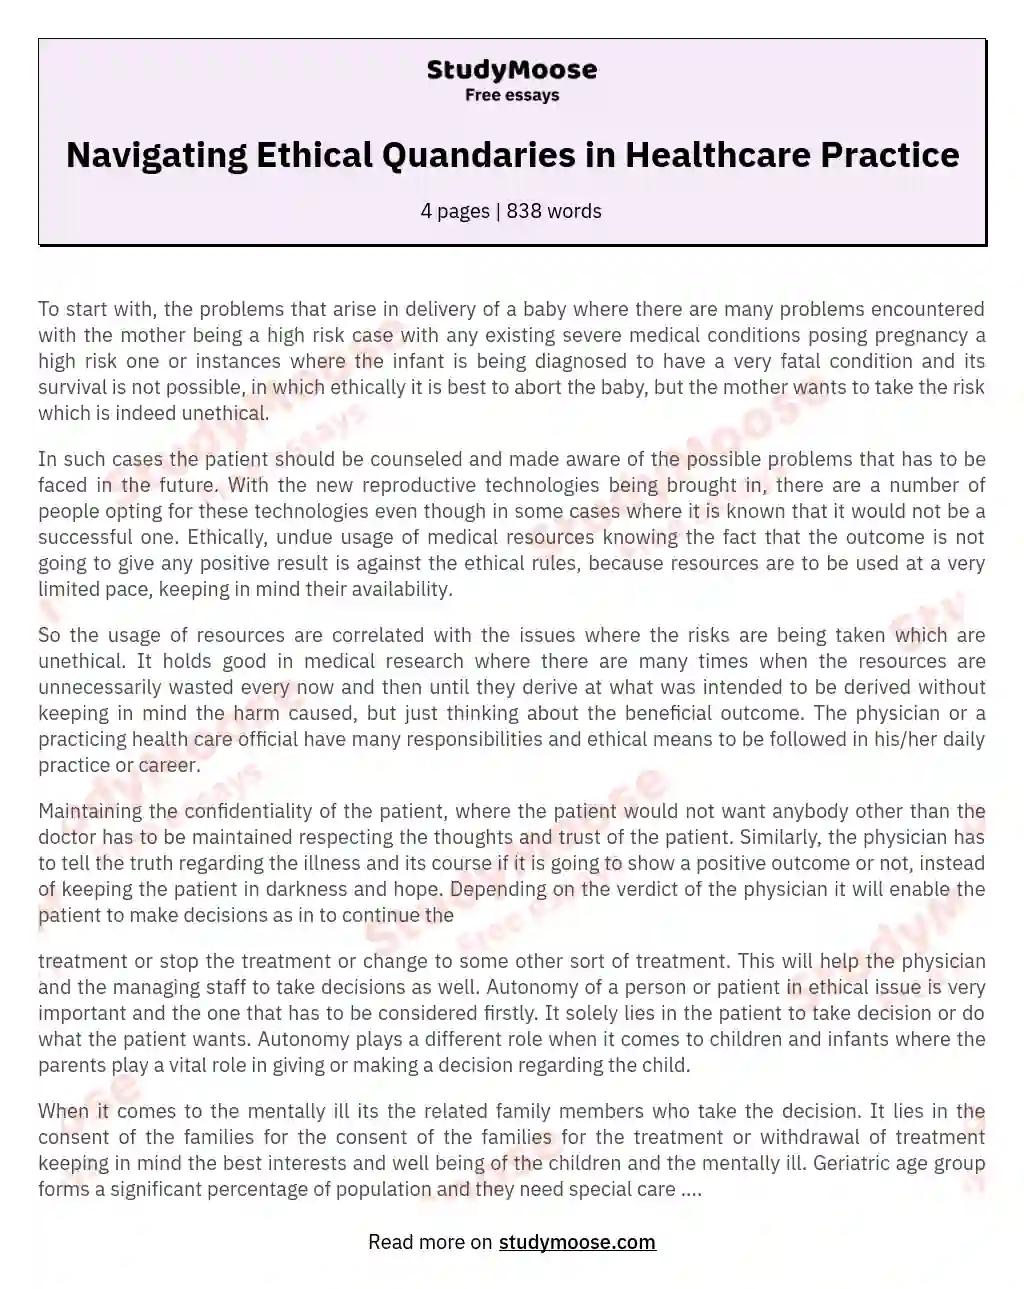 Navigating Ethical Quandaries in Healthcare Practice essay